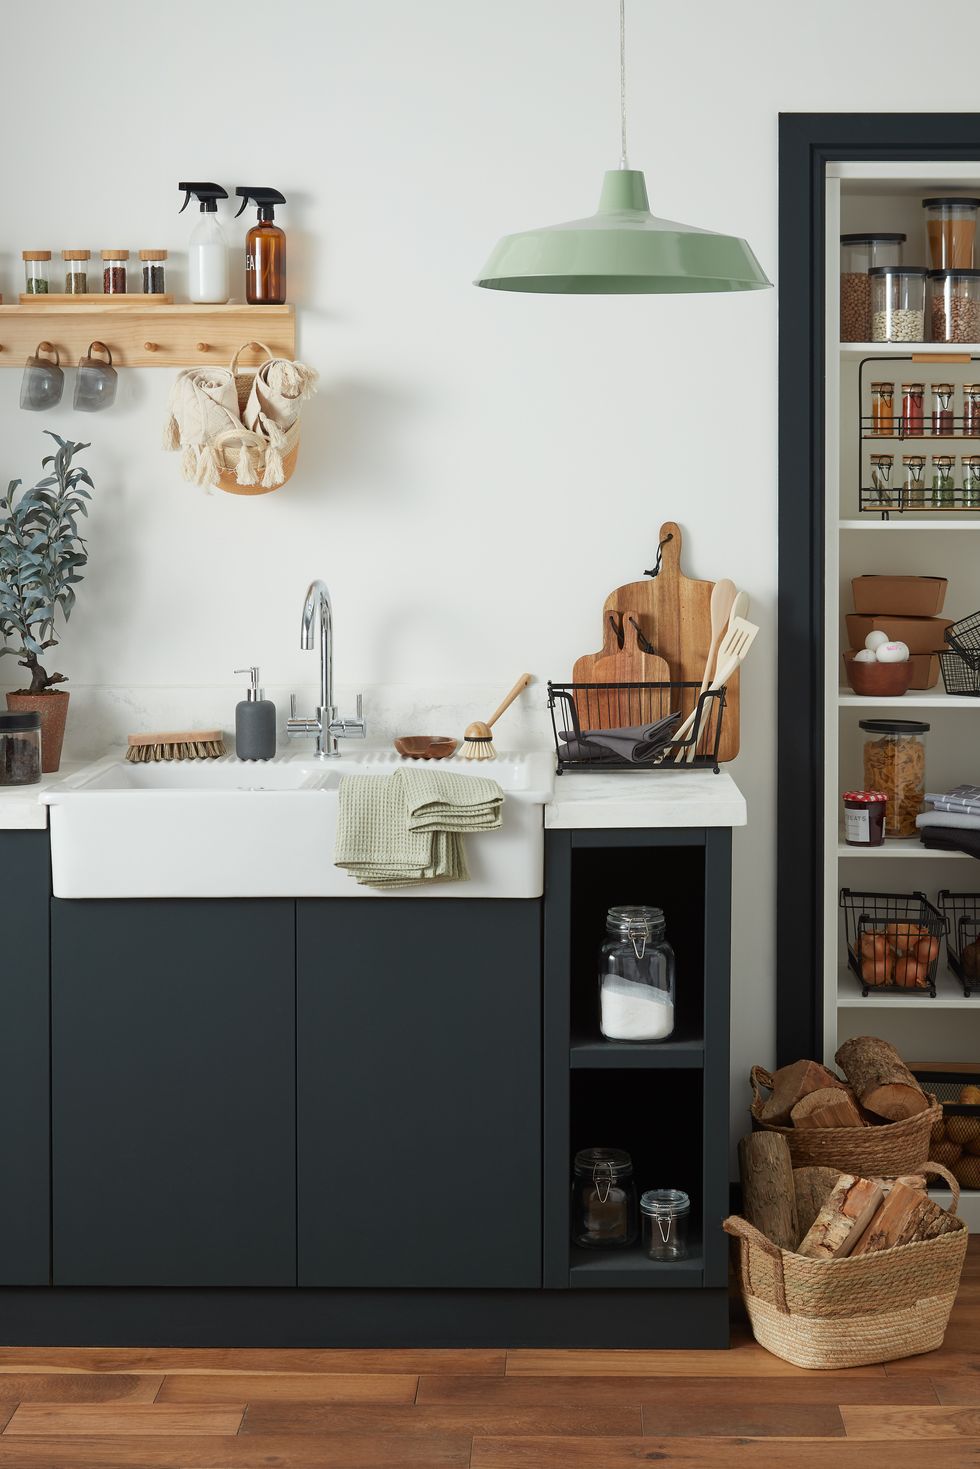 kitchen pantry and larder ideas